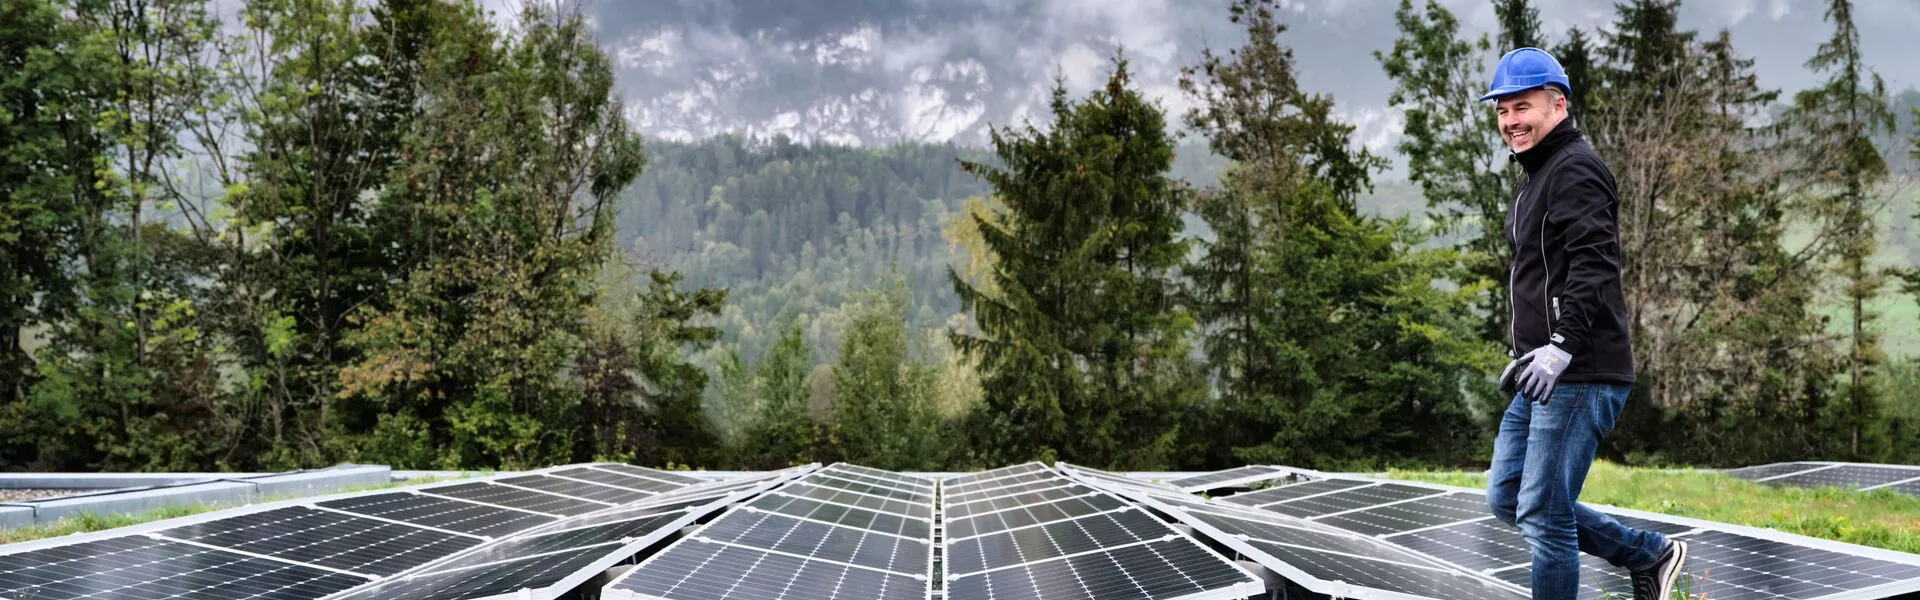 Solar Panel Sustainability - Myanmar